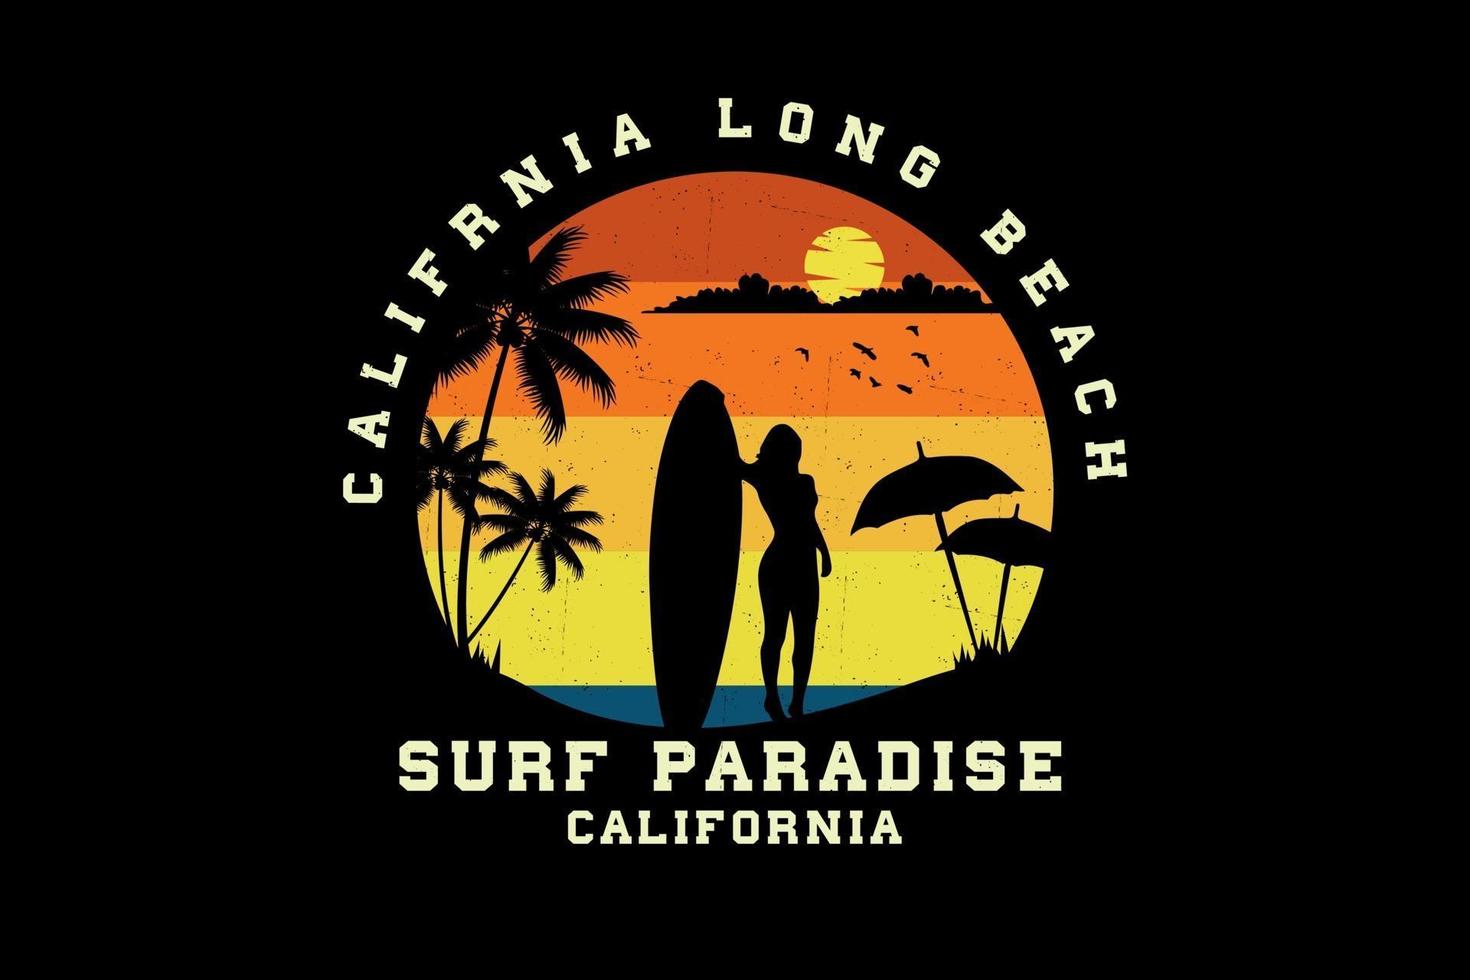 Surf paradise california silhouette design vector